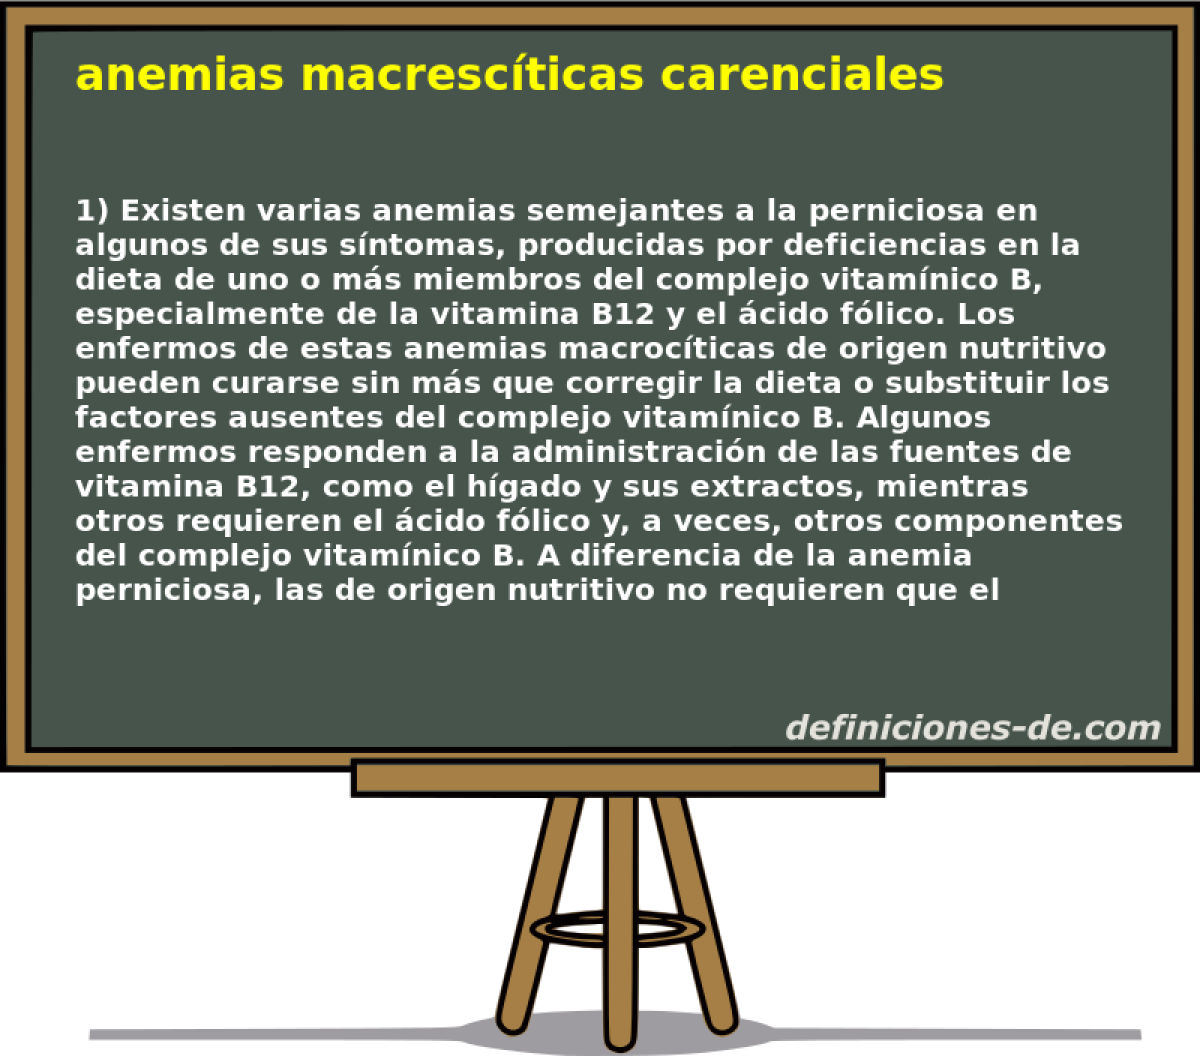 anemias macrescticas carenciales 